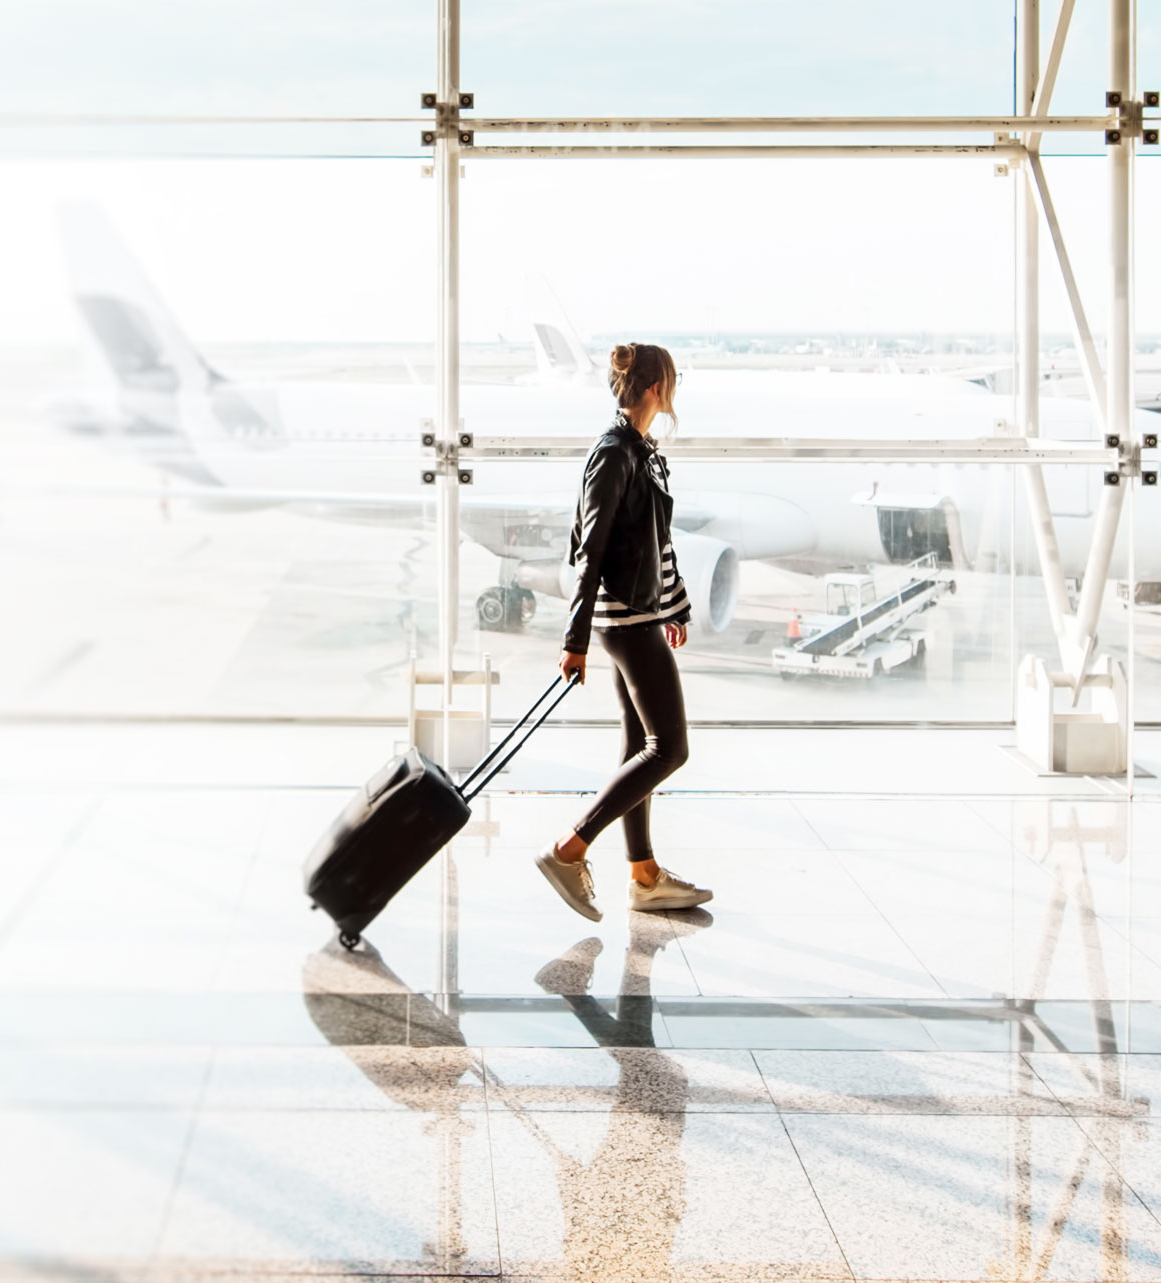 Traveler walks through airport